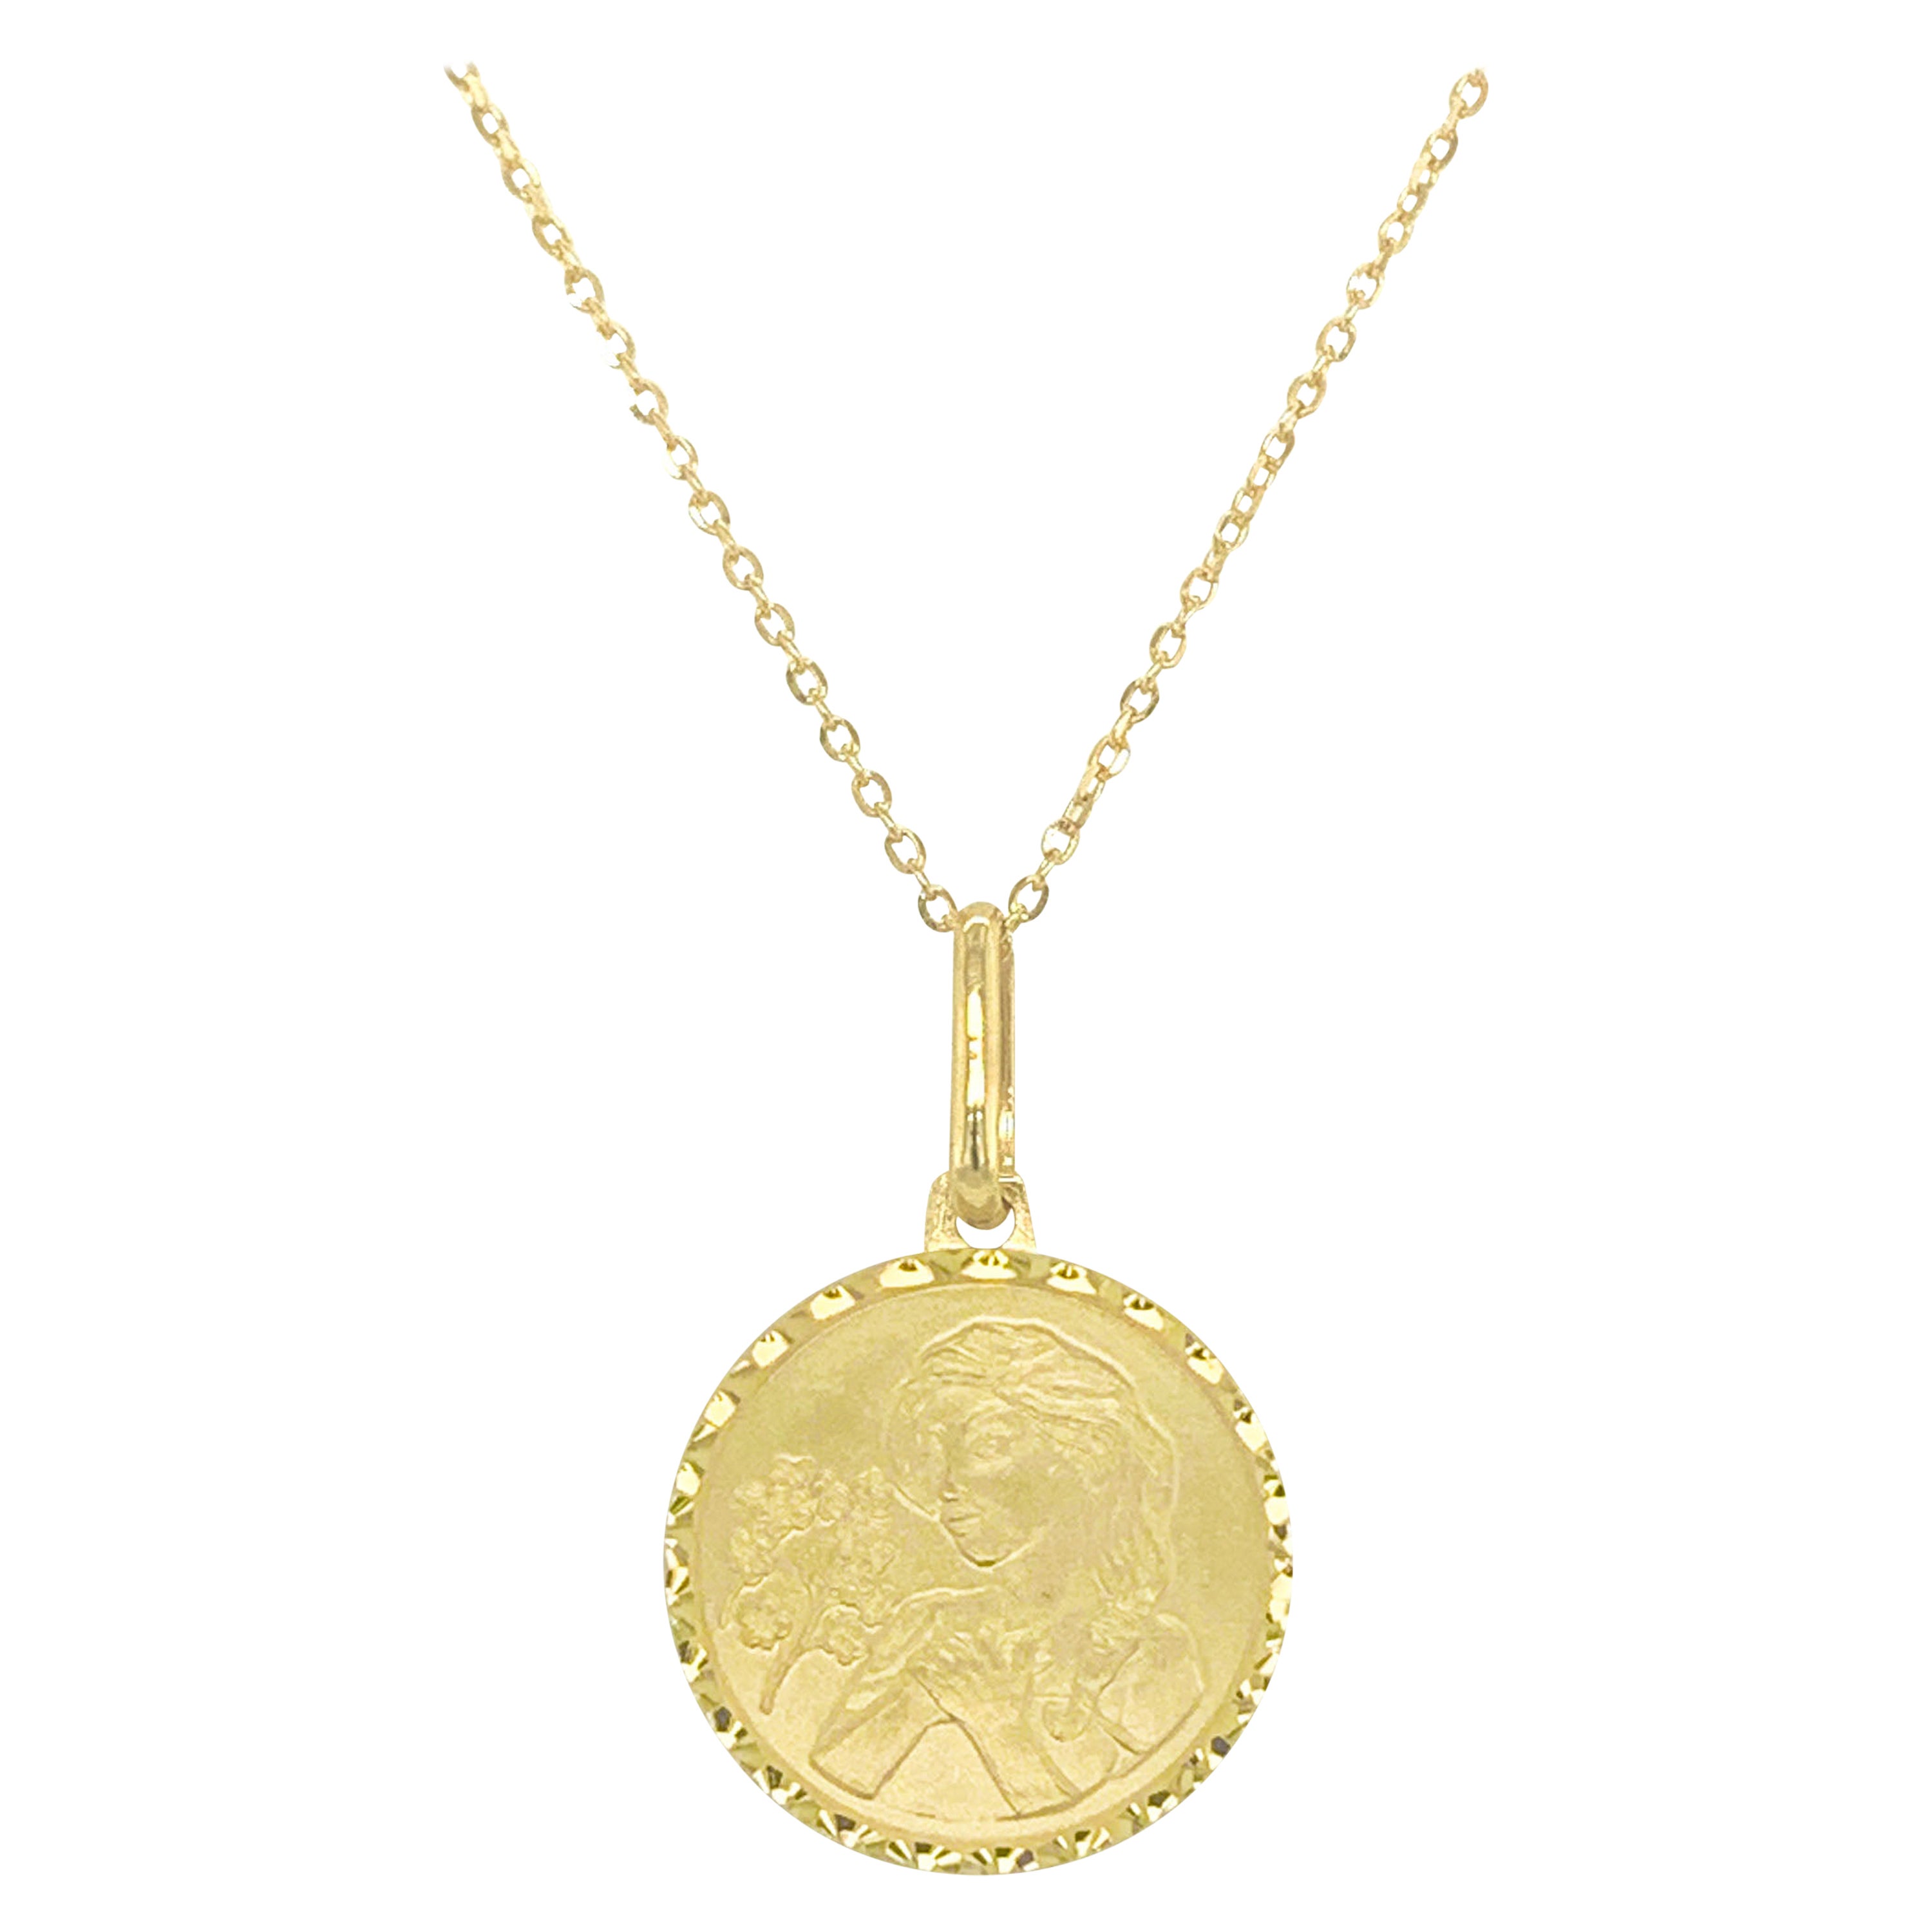 Collier pendentif signe du zodiaque en or jaune 14 carats, Virgo